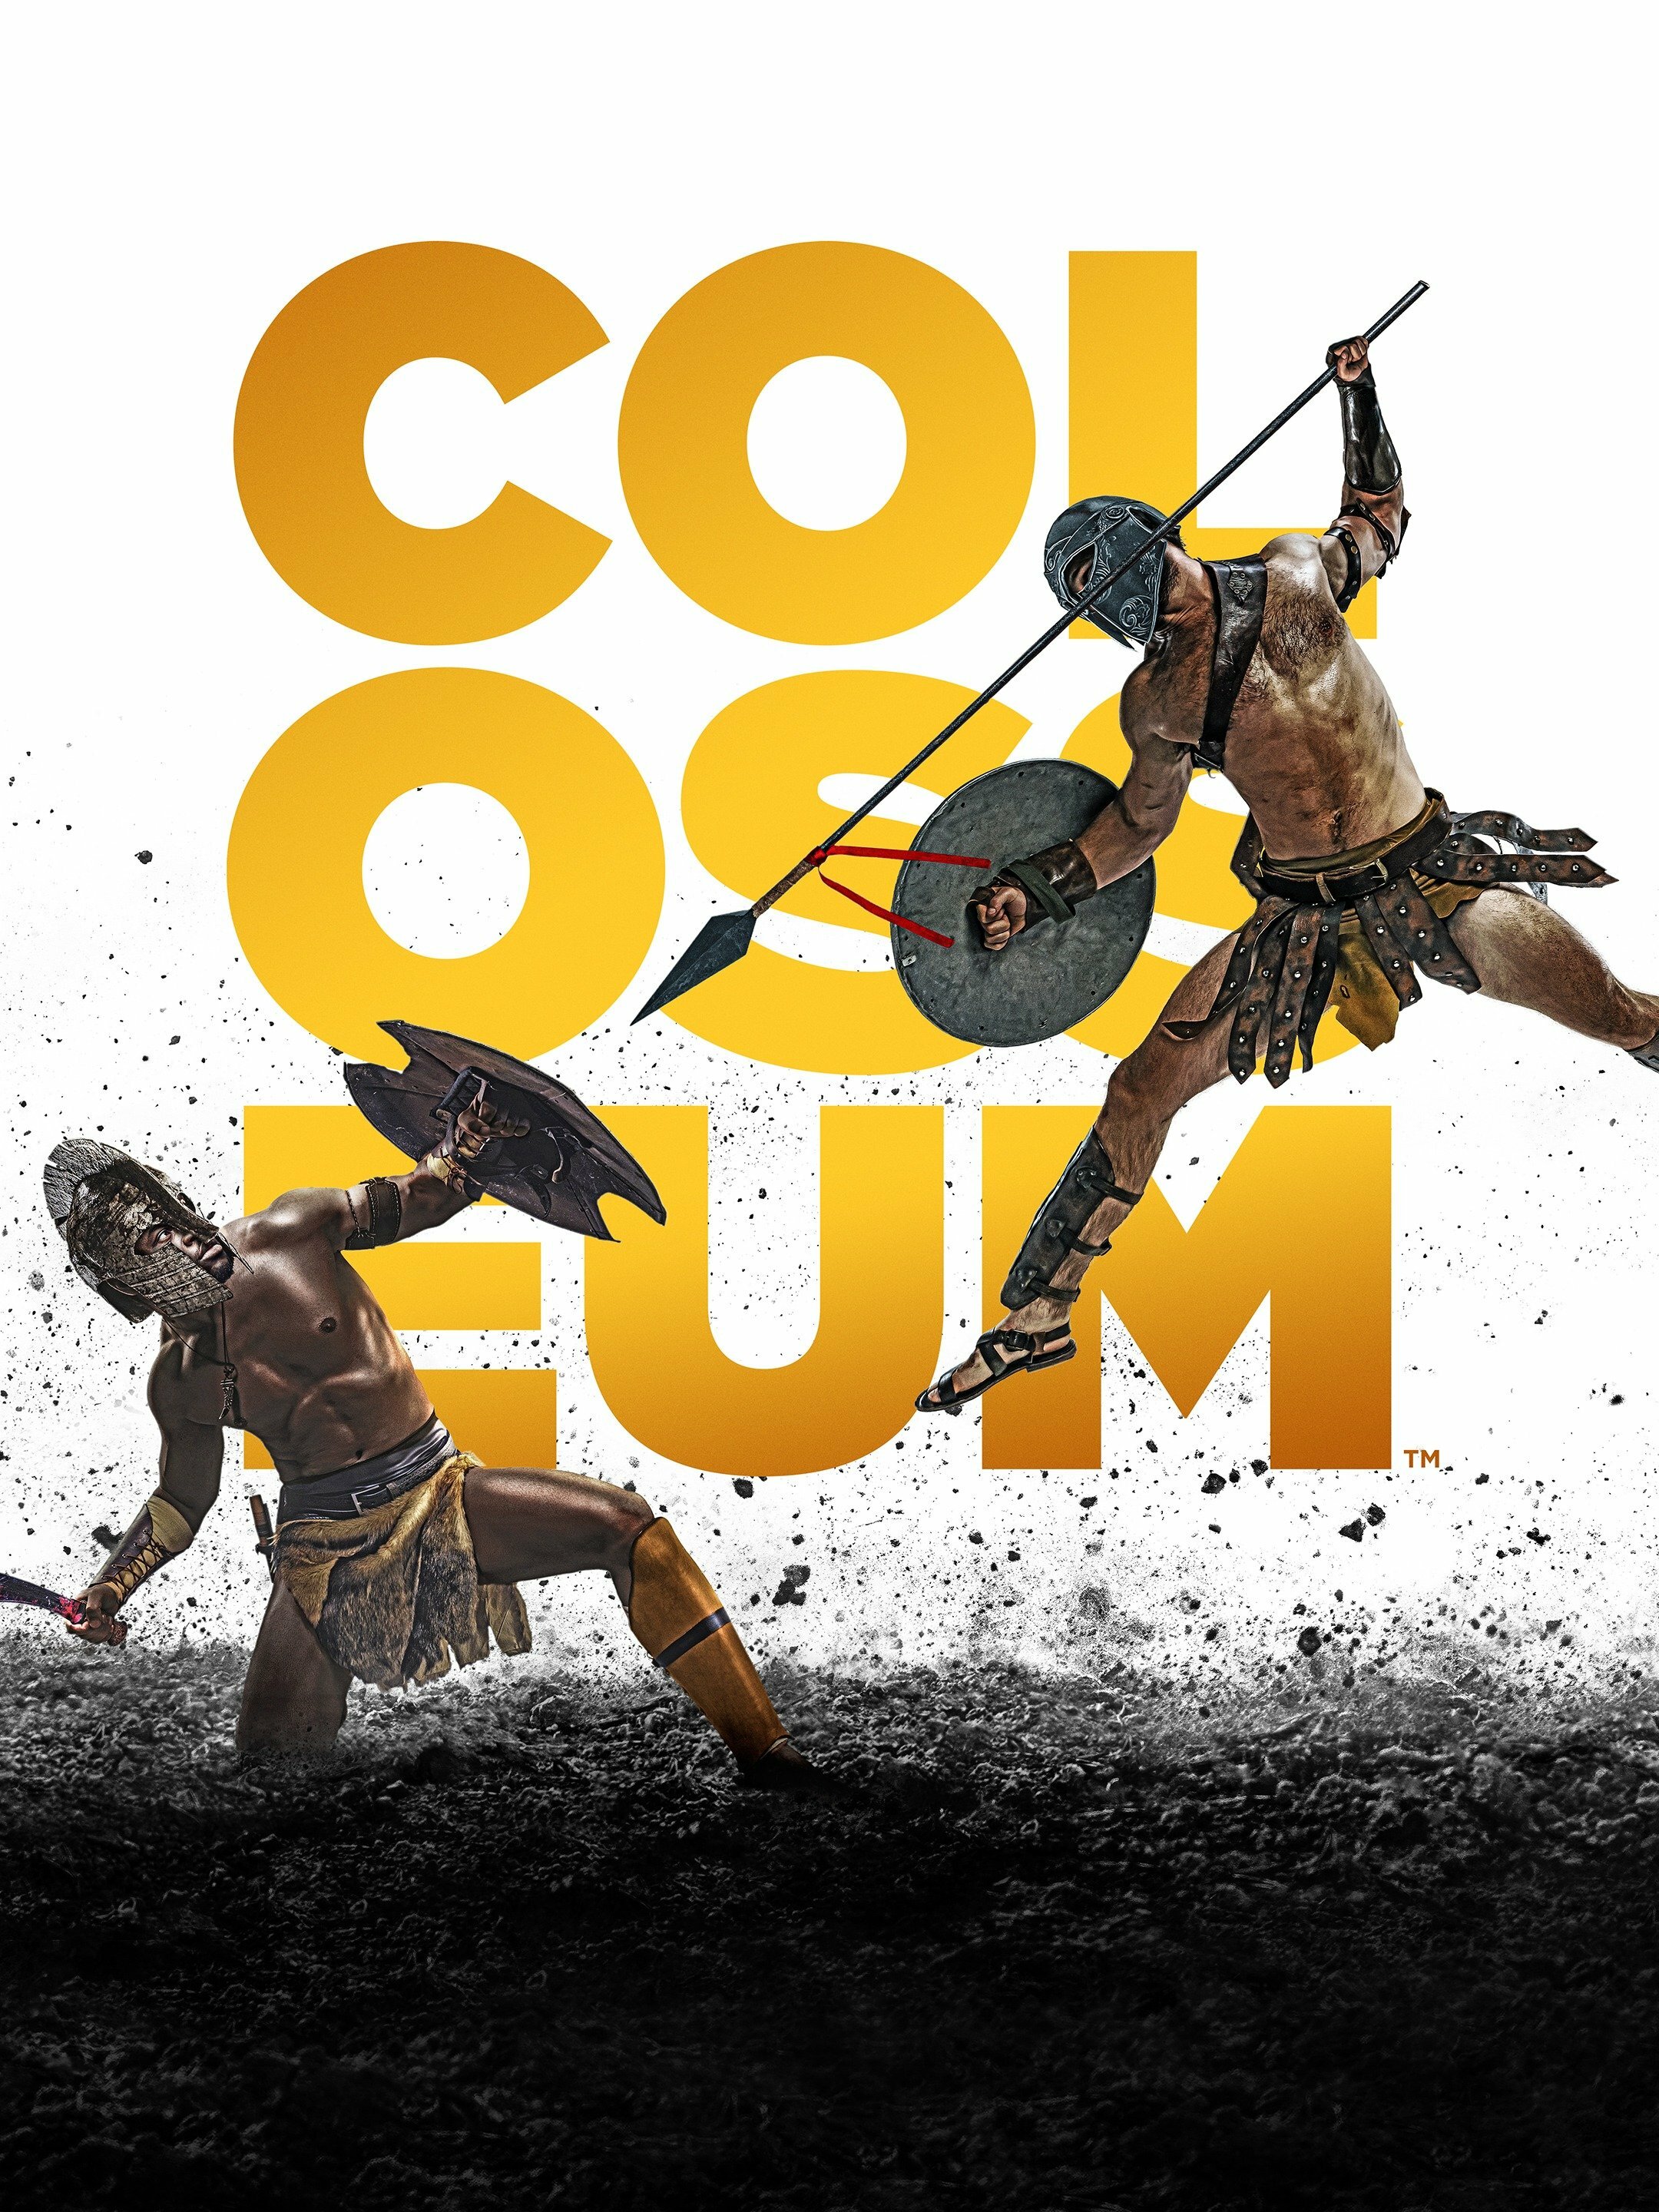 Colosseum ne zaman